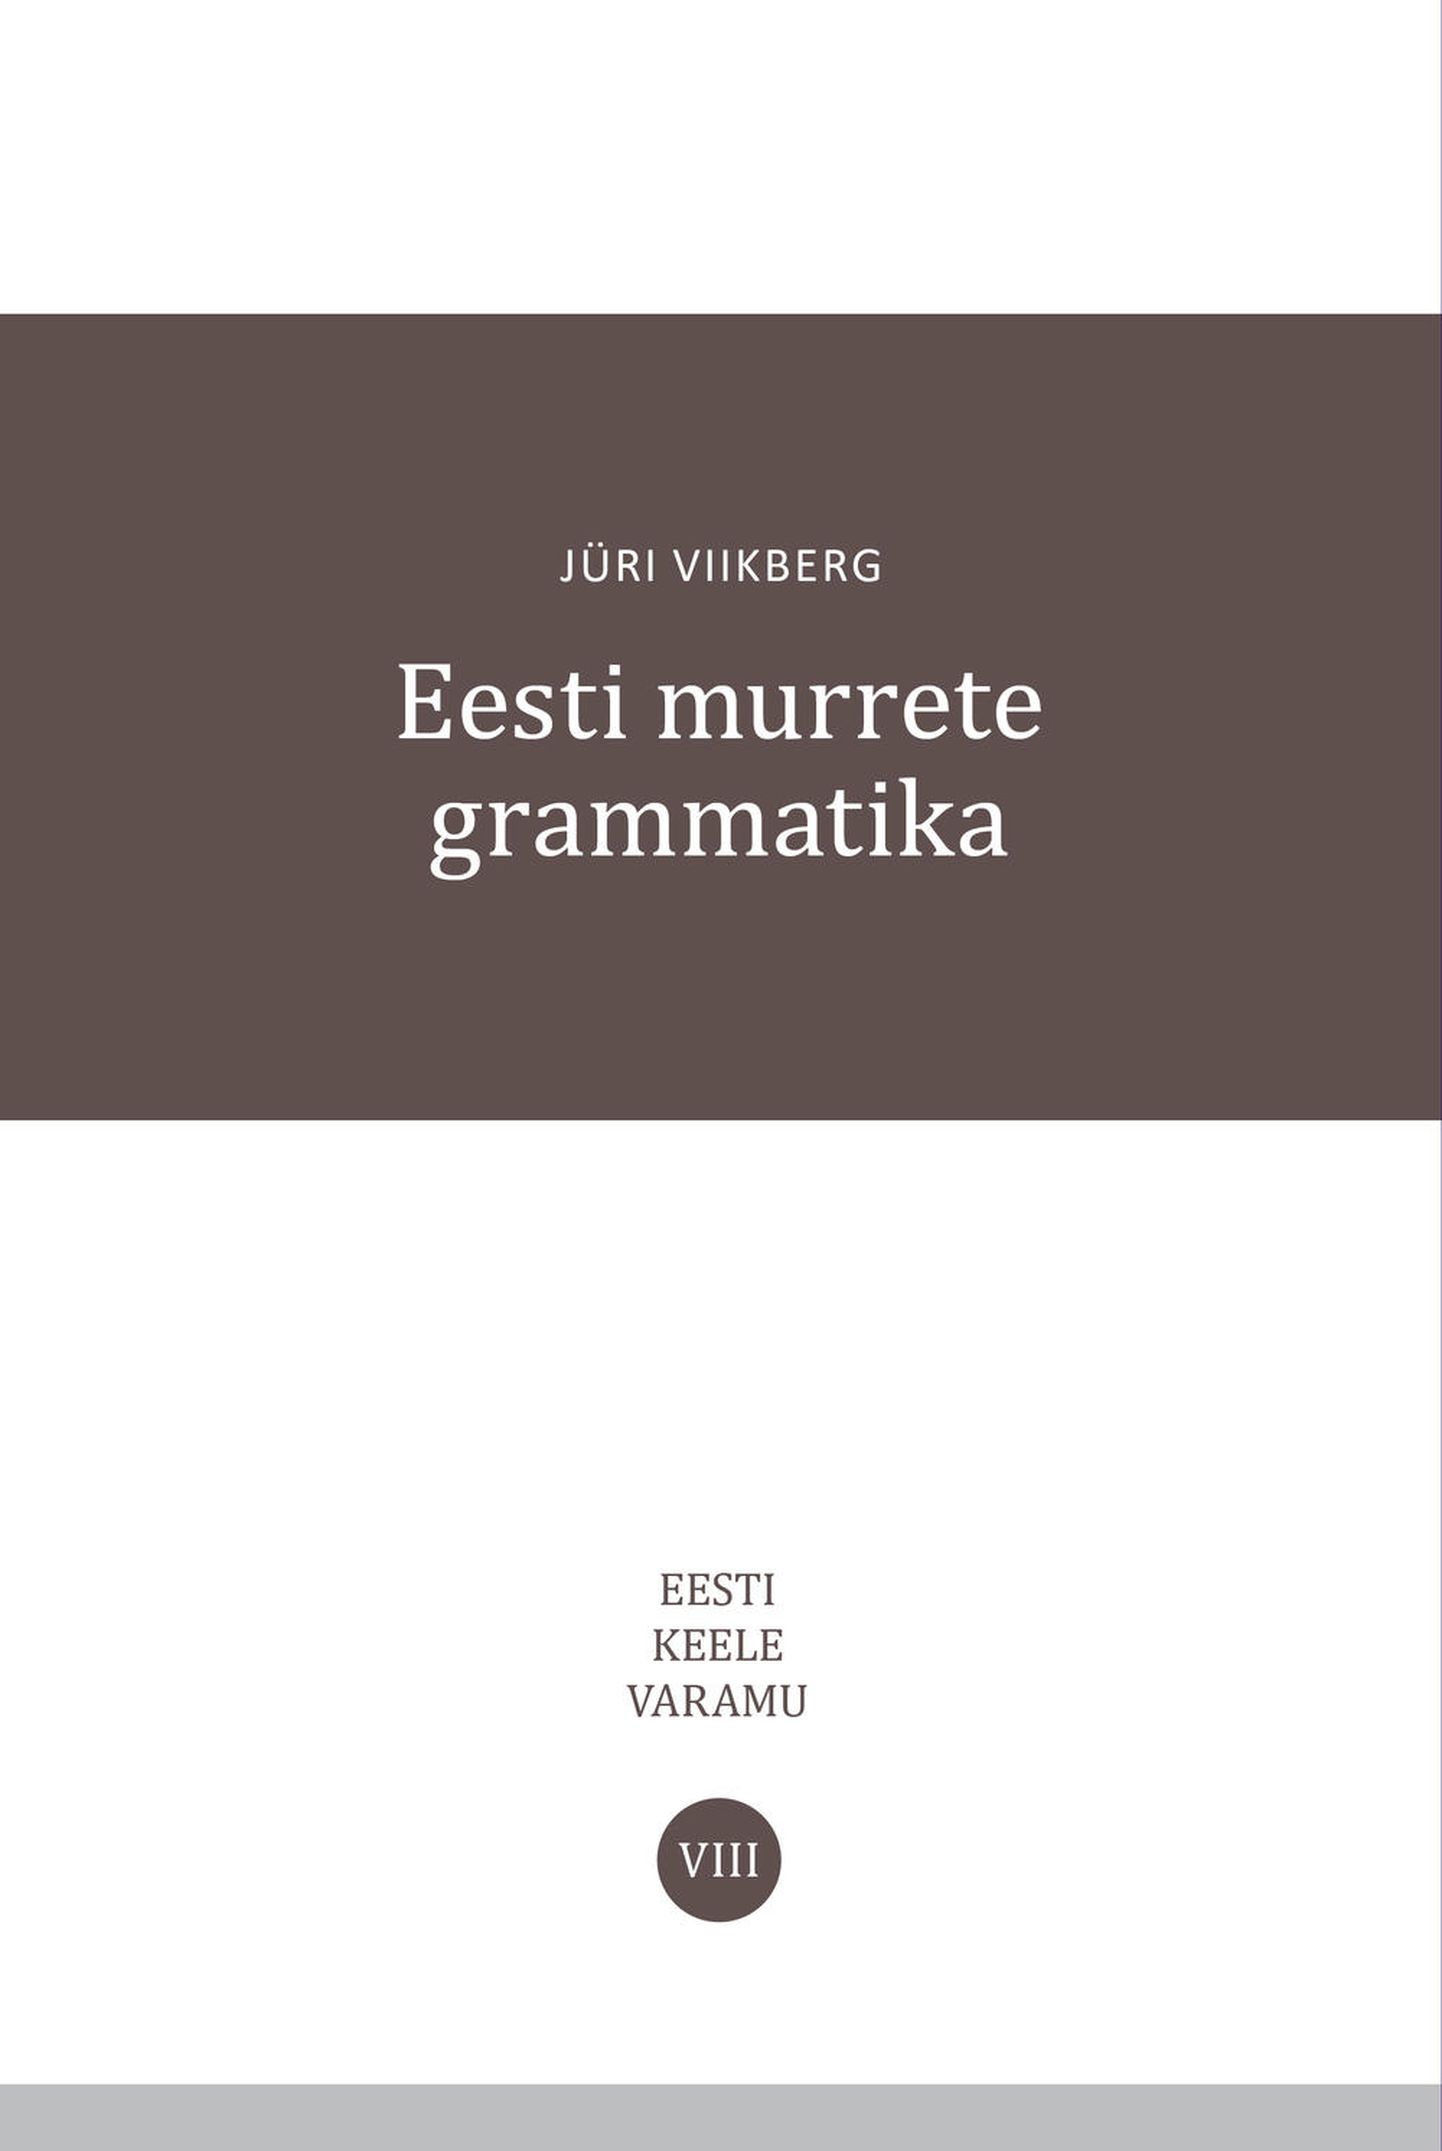 Jüri Viikberg, «Eesti murrete grammatika».